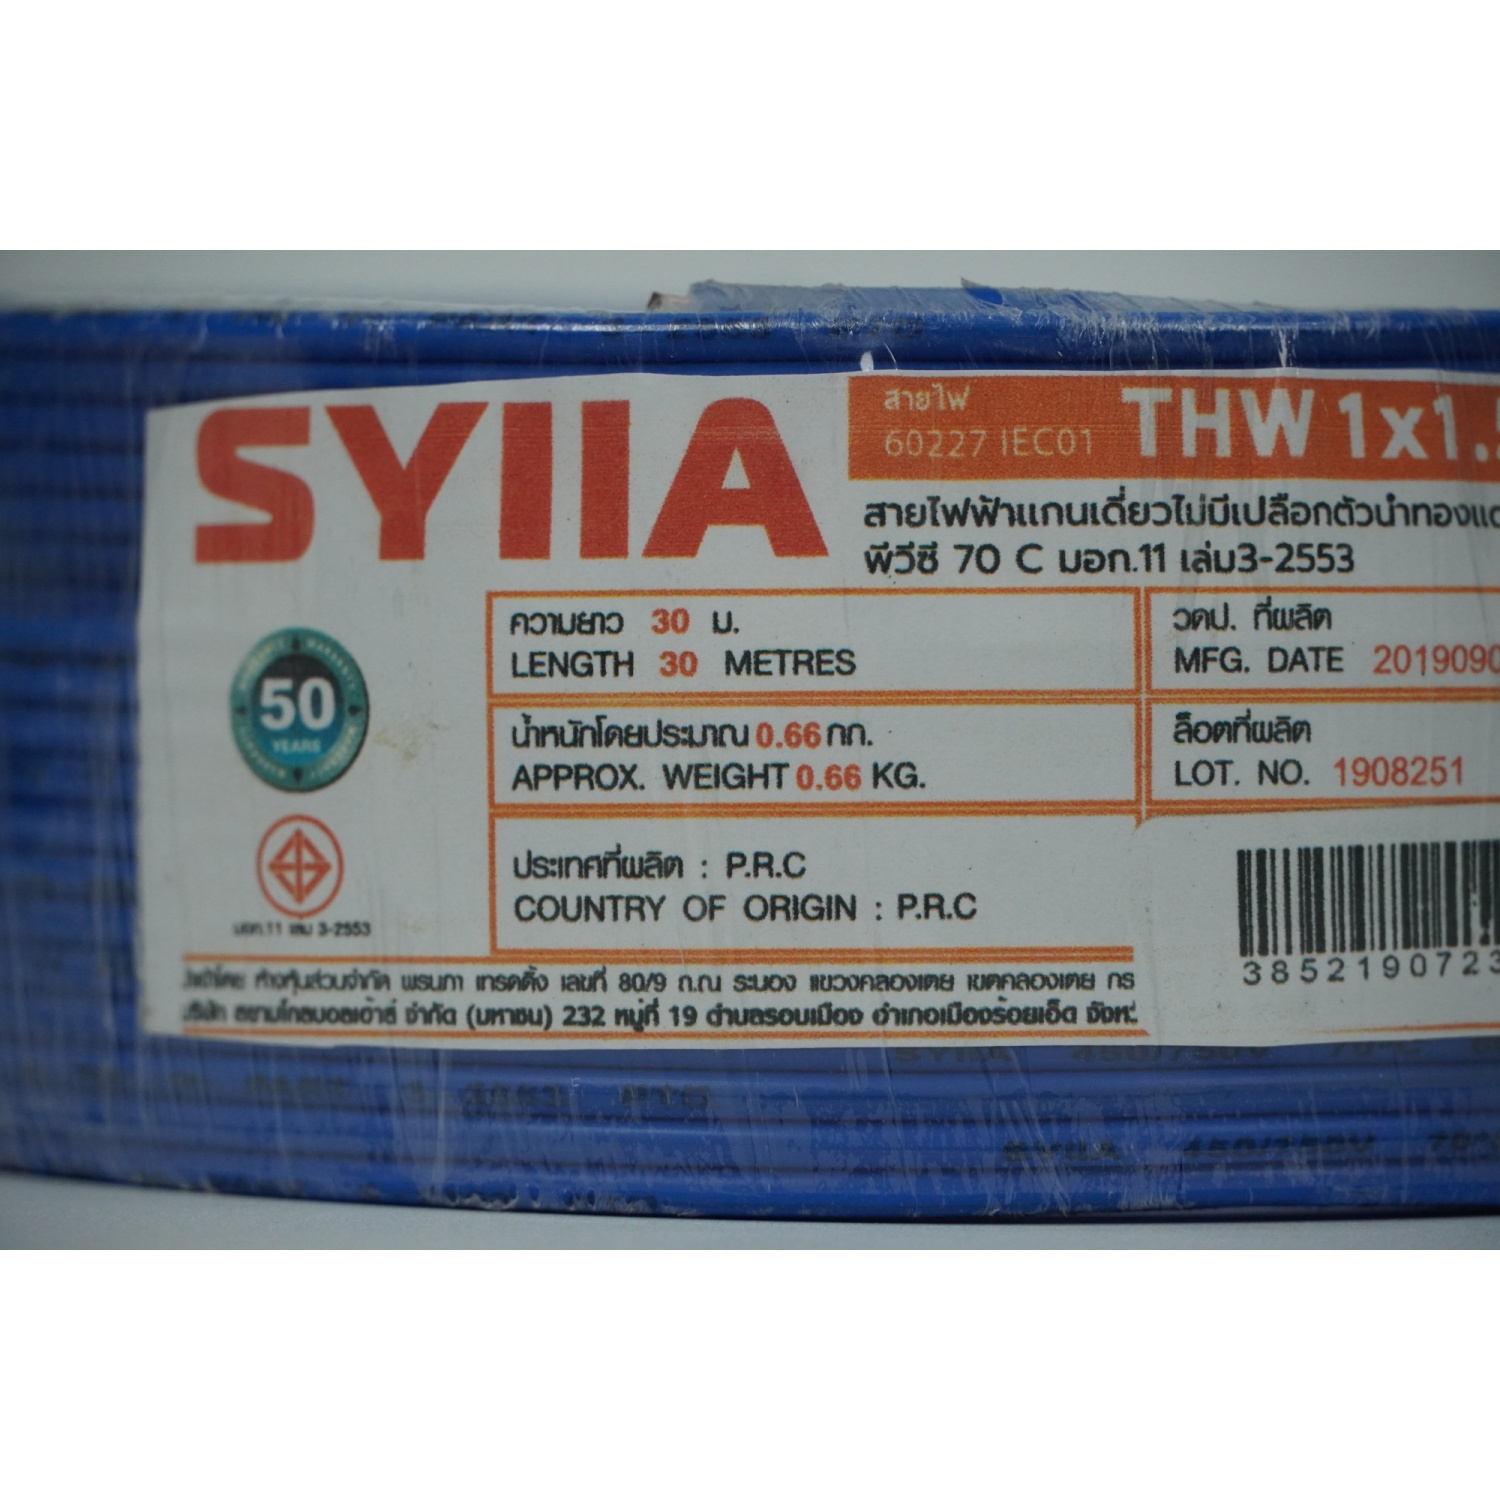 SYLLYA  สายไฟ IEC01 THW 1x1.5 Sq.mm. 30m. SYIIA สีฟ้า